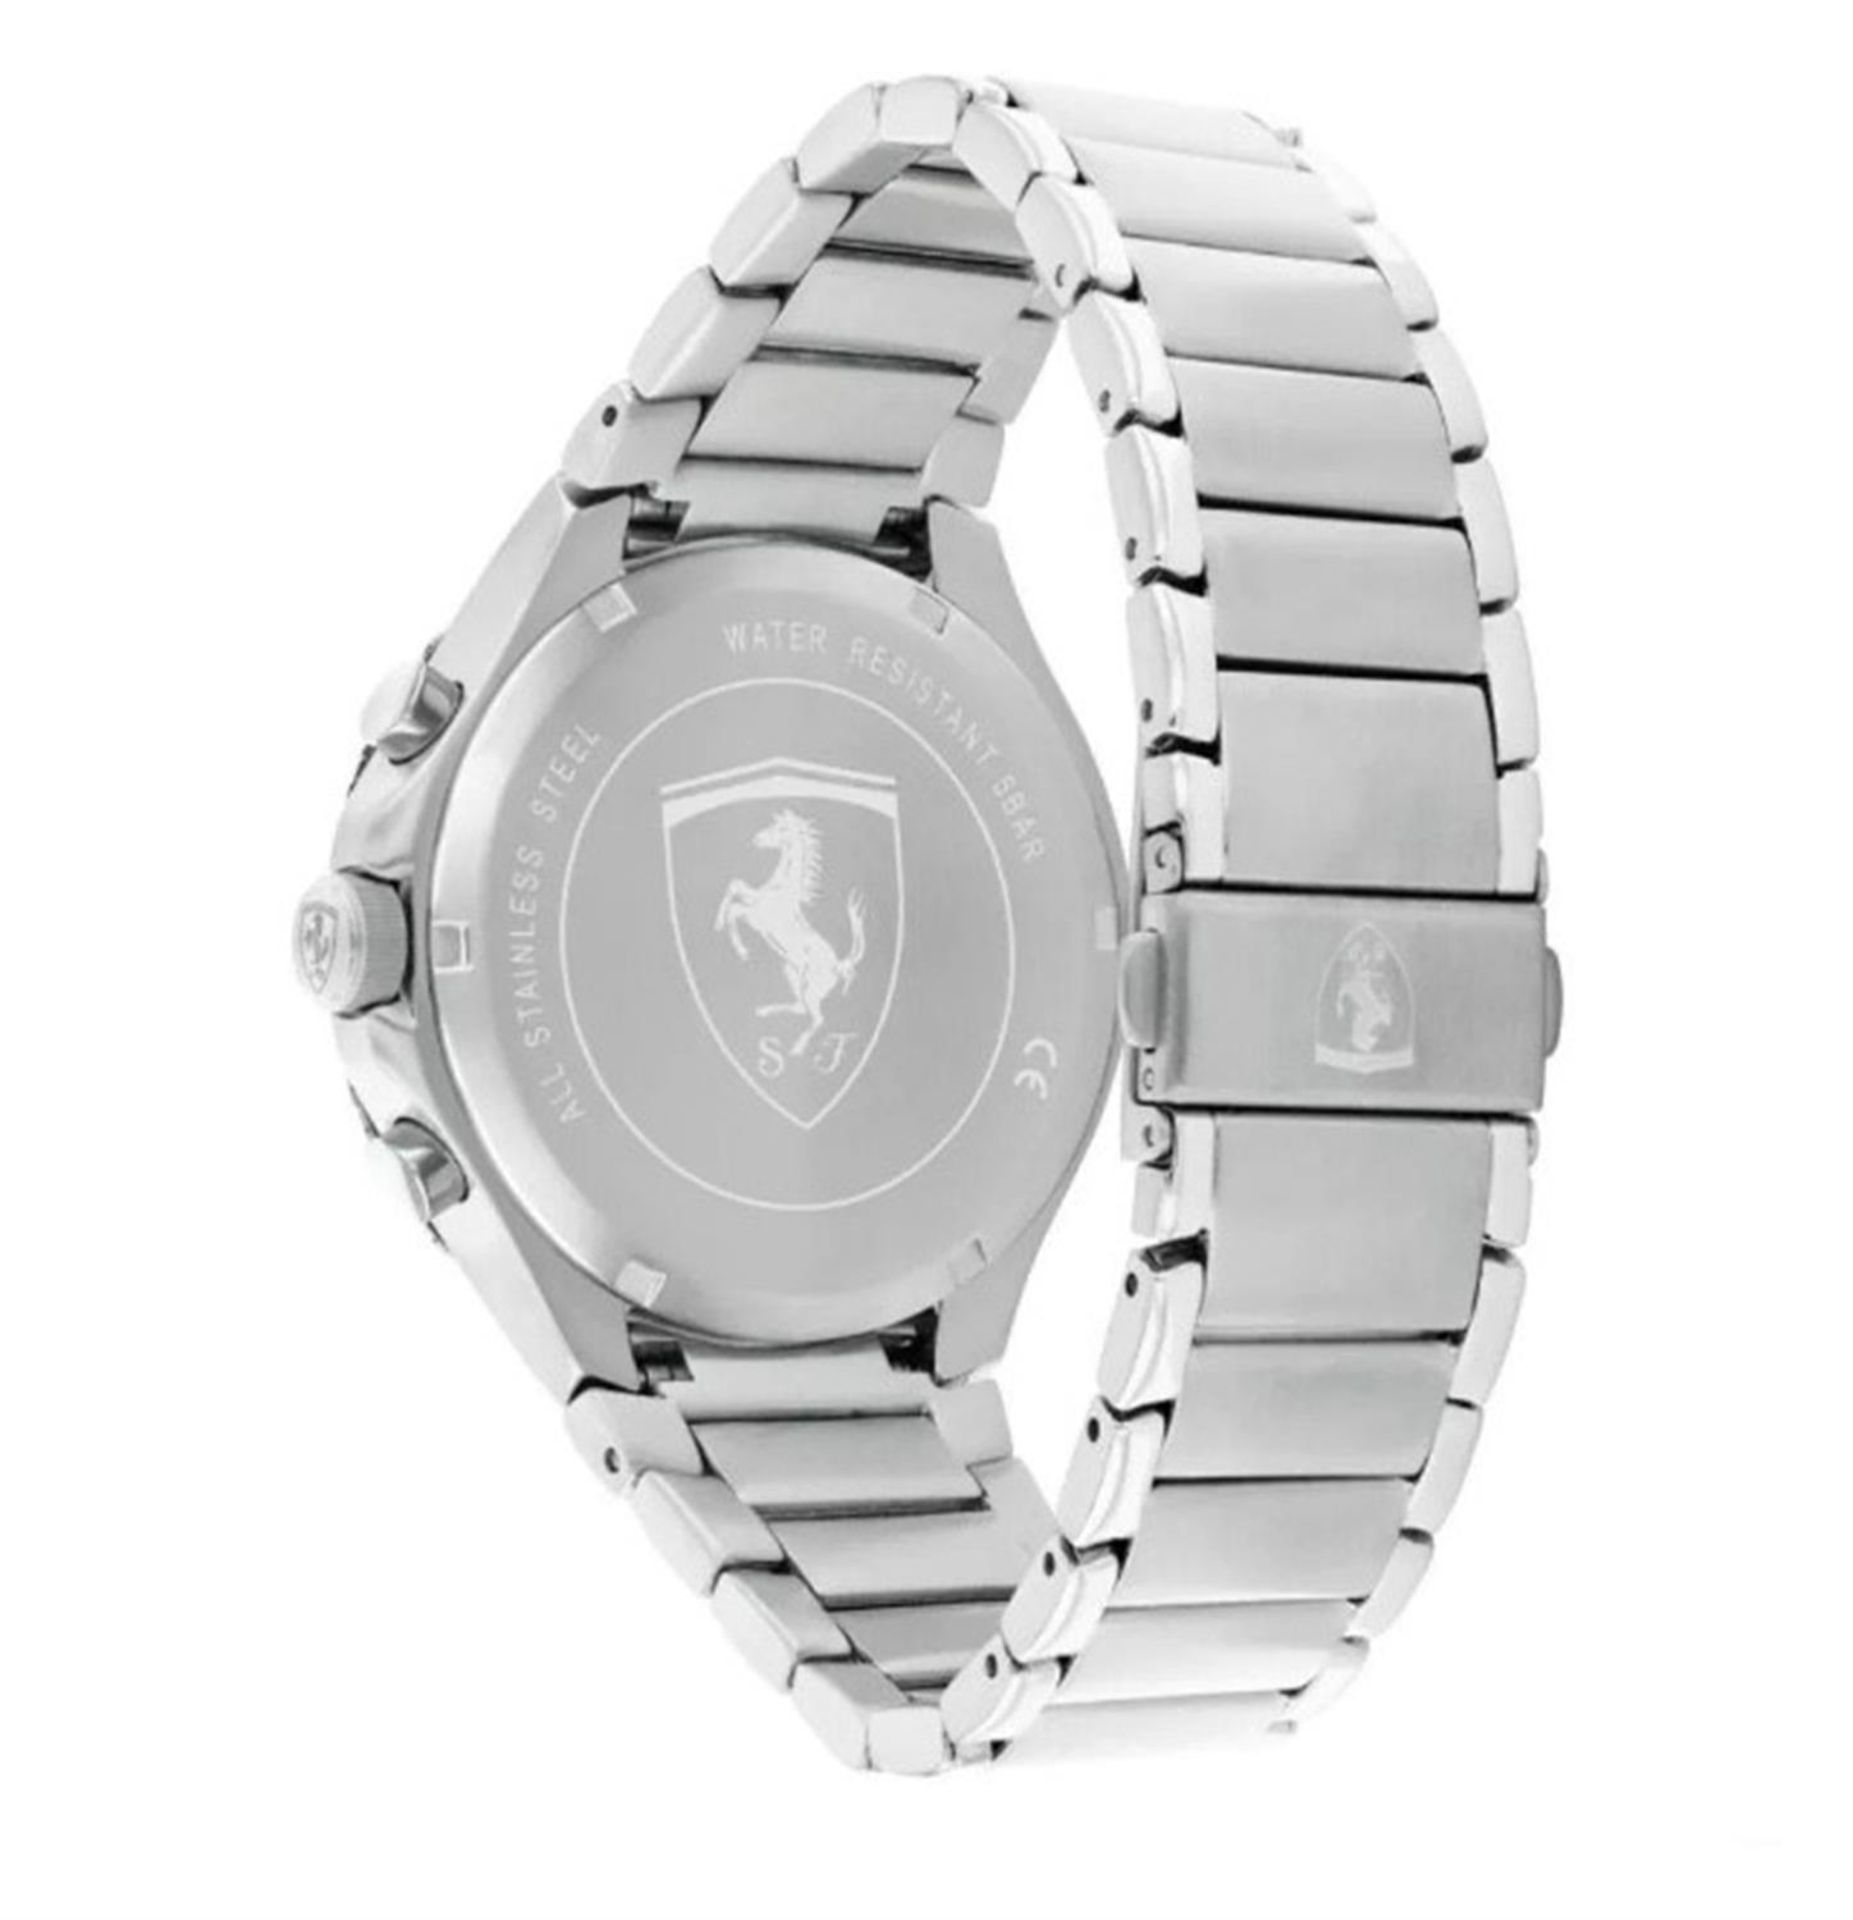 A fine Ferrari 488 Pista 0830854 gentleman's wrist watch - Image 3 of 6